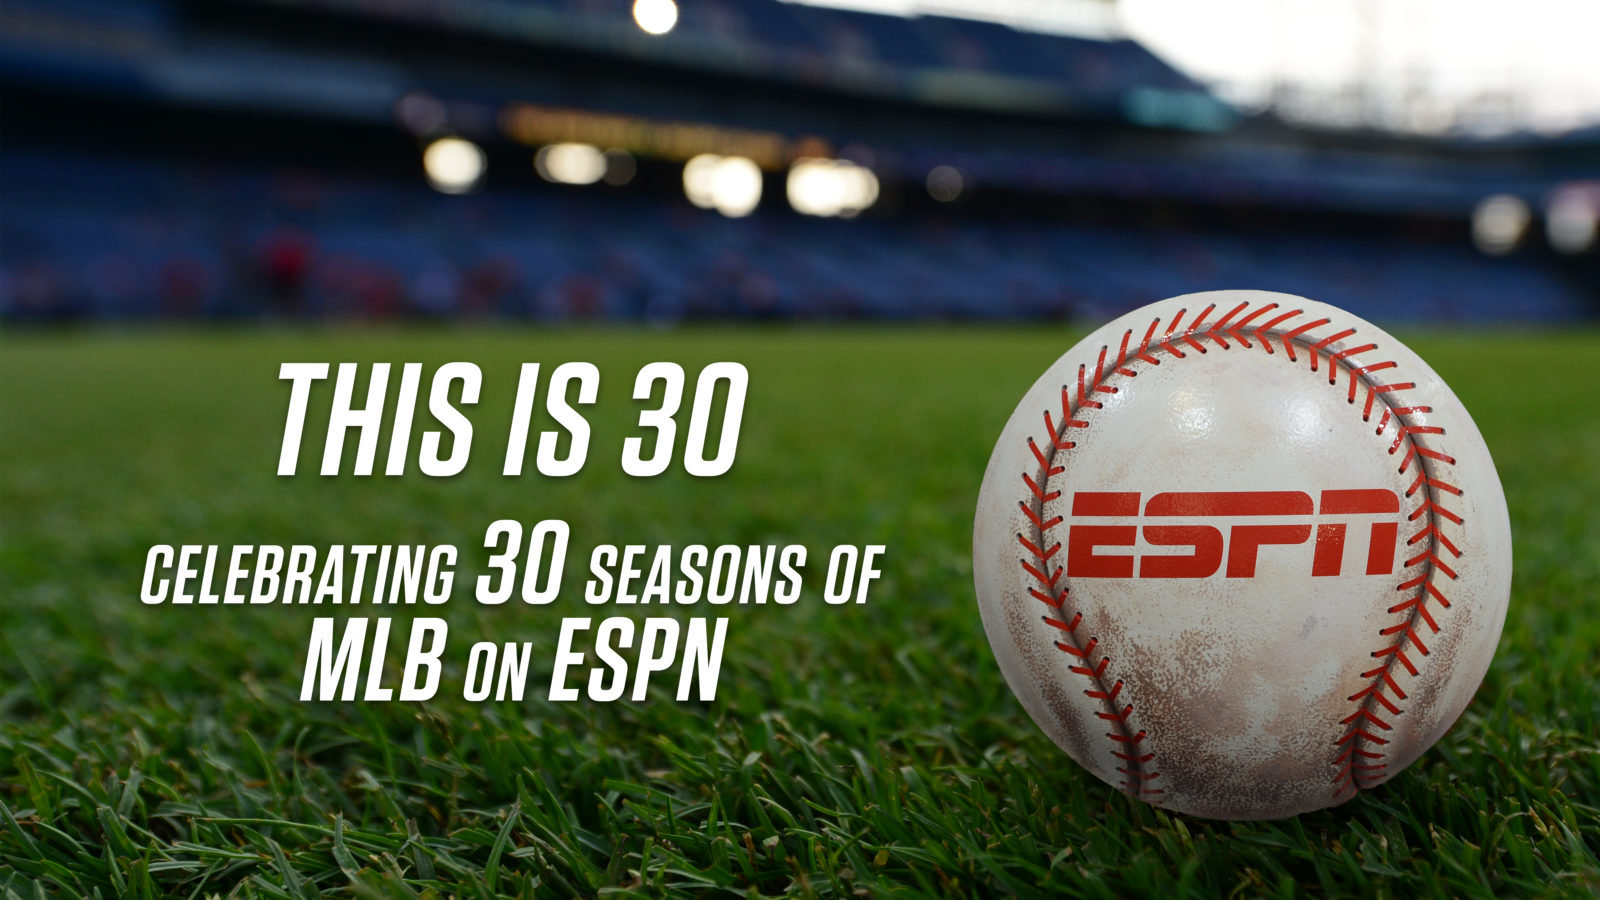 This Is 30 Celebrating 30 Seasons of MLB on ESPN